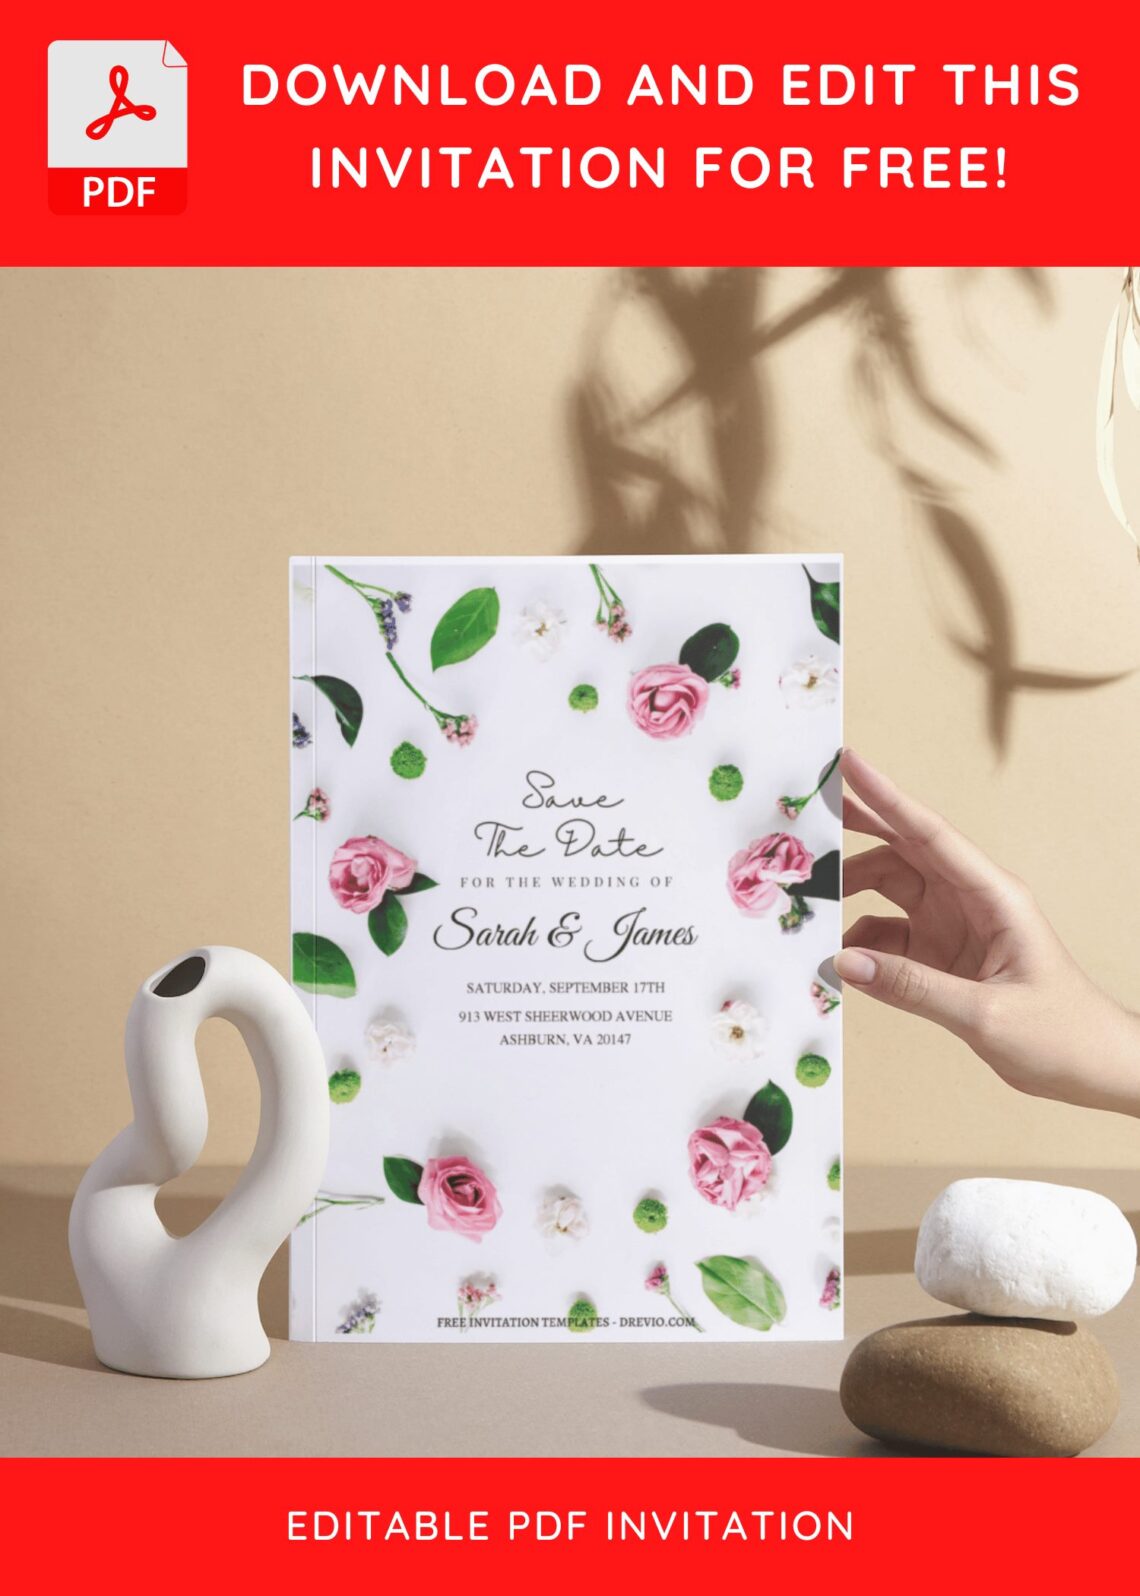 (Free Editable PDF) Romantic Garden Of Roses Wedding Invitation Templates I